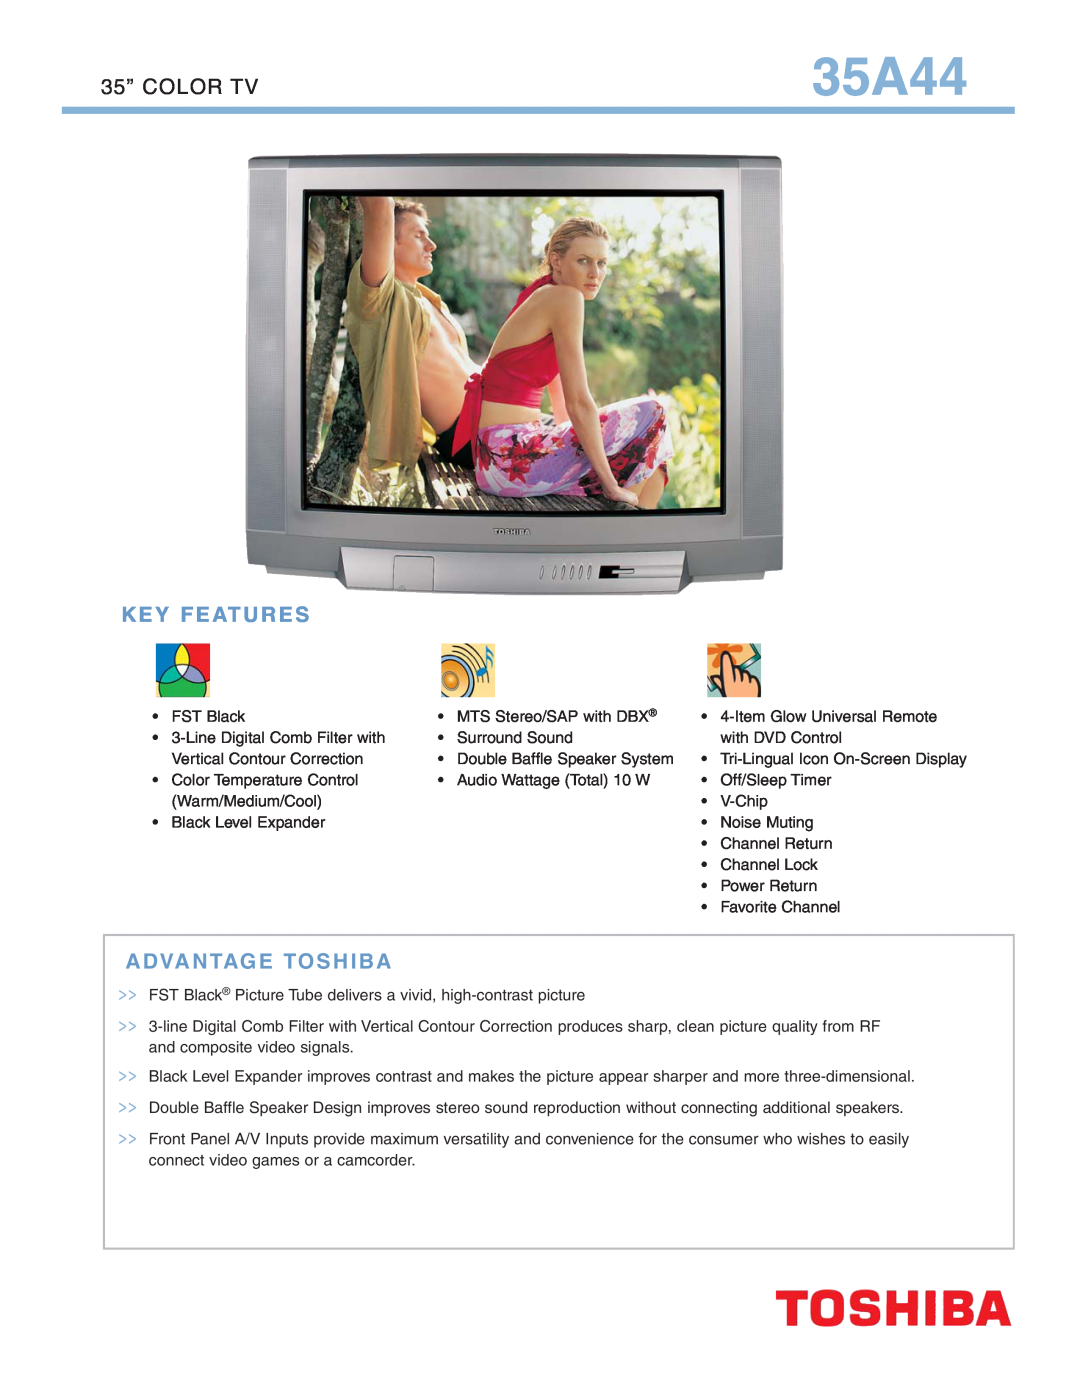 Toshiba 35A44 manual Key Features, Advantage Toshiba, 35” COLOR TV 